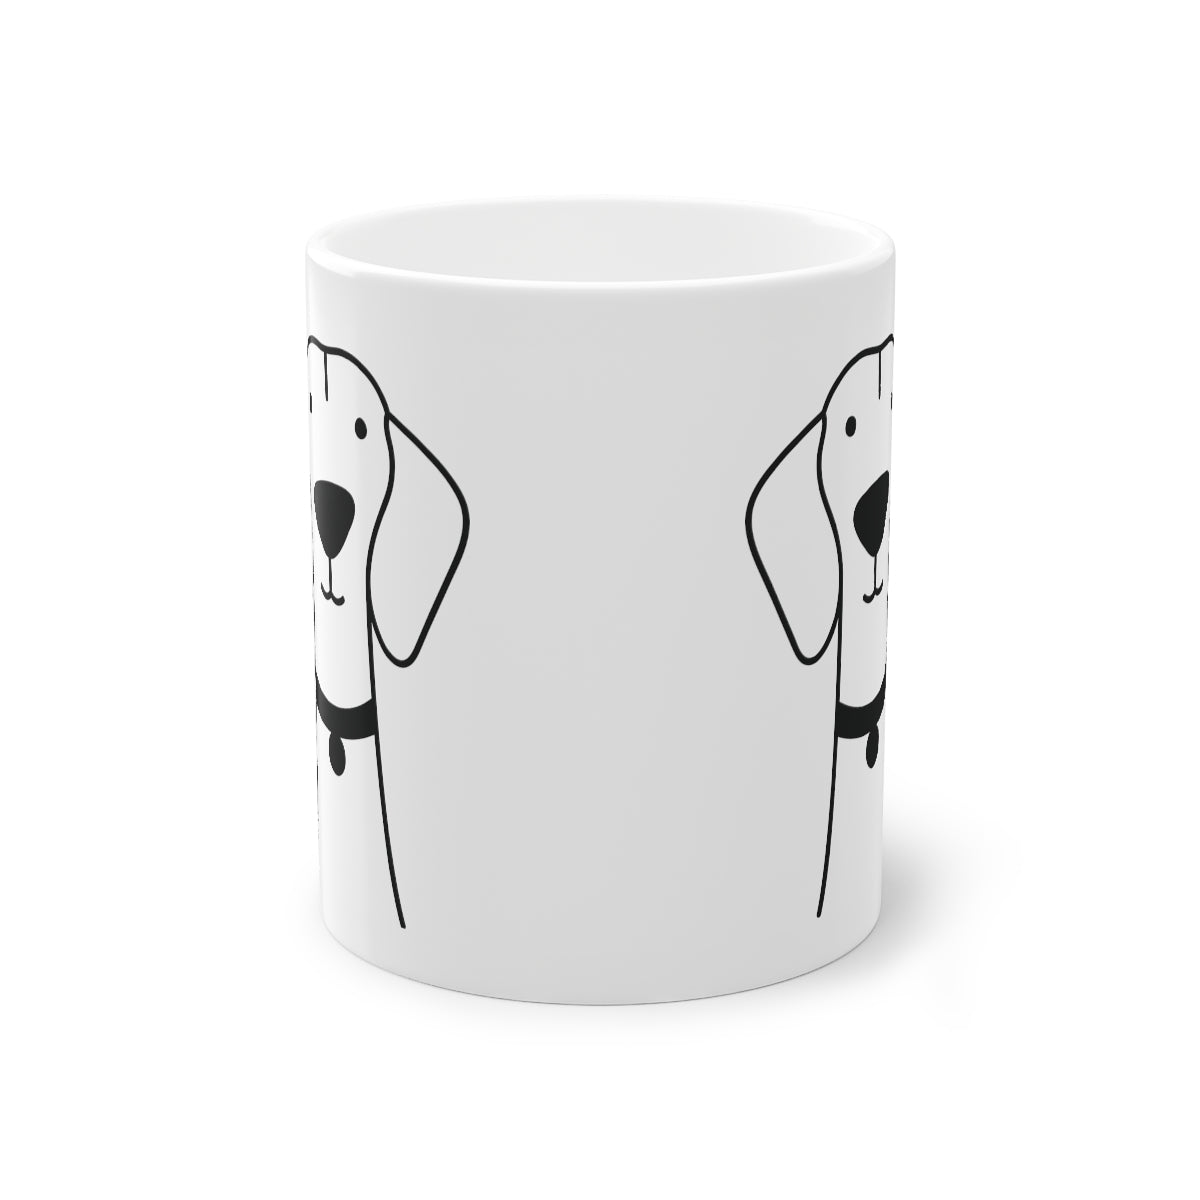 Cute dog Vizsla mug, white, 325 ml / 11 oz Coffee mug, tea mug for kids, children, puppies mug for dog lovers, dog owners